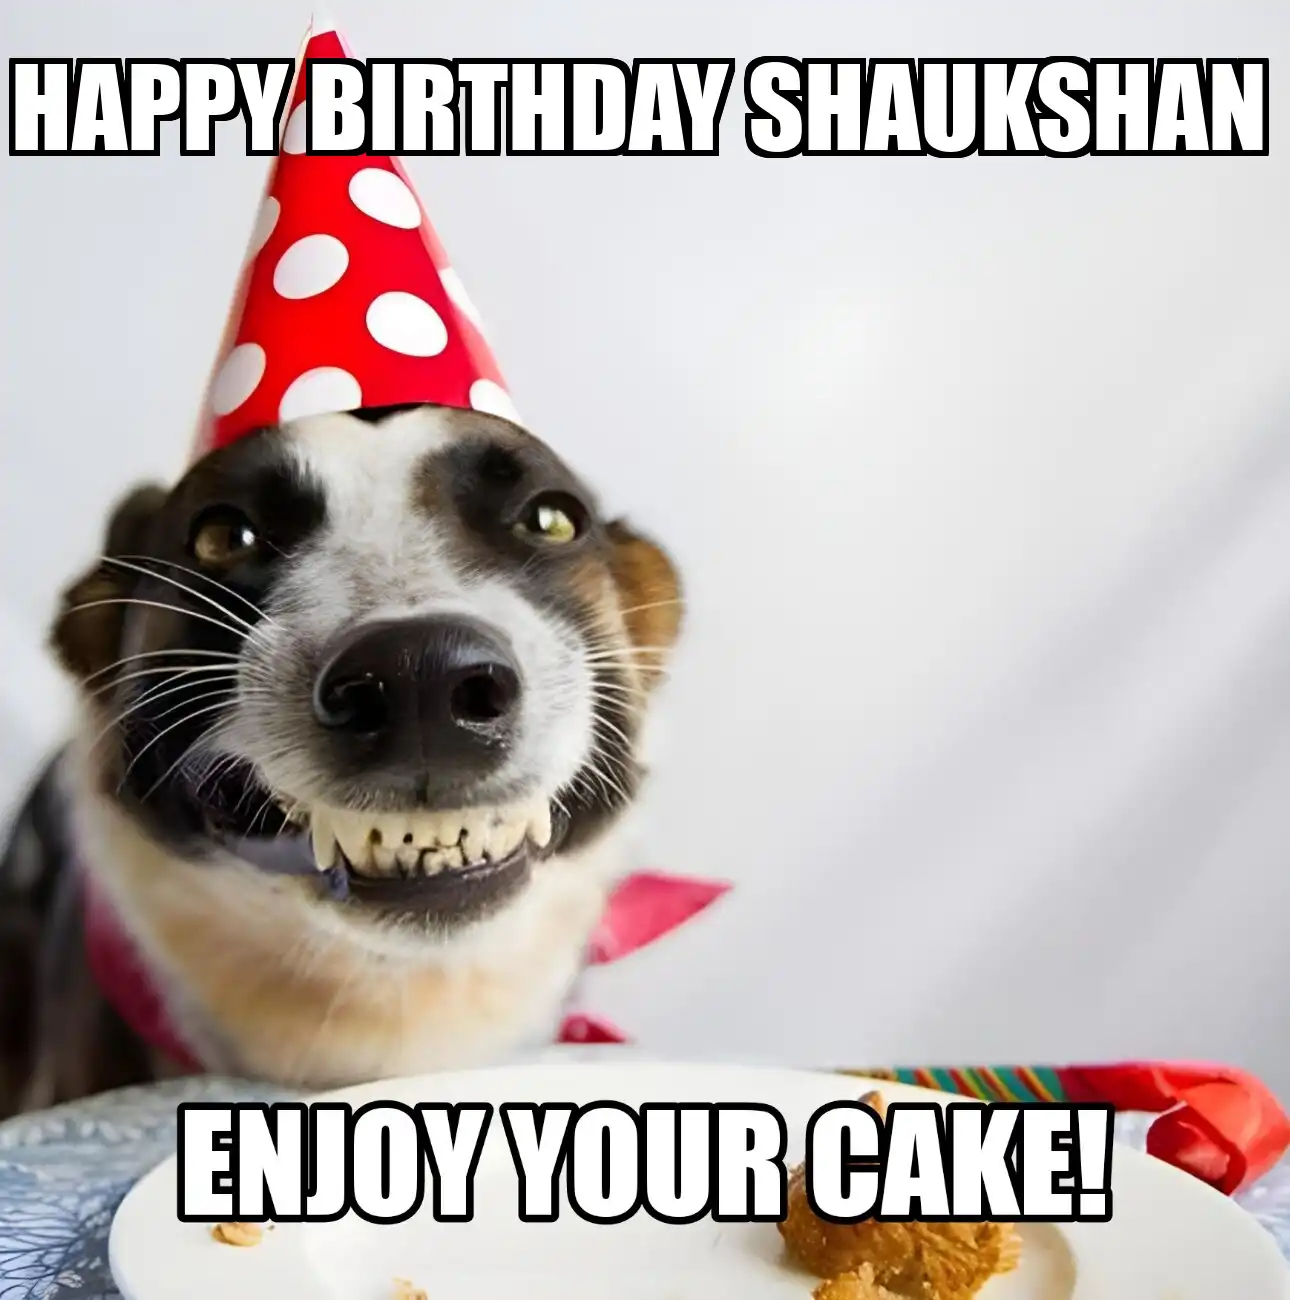 Happy Birthday Shaukshan Enjoy Your Cake Dog Meme